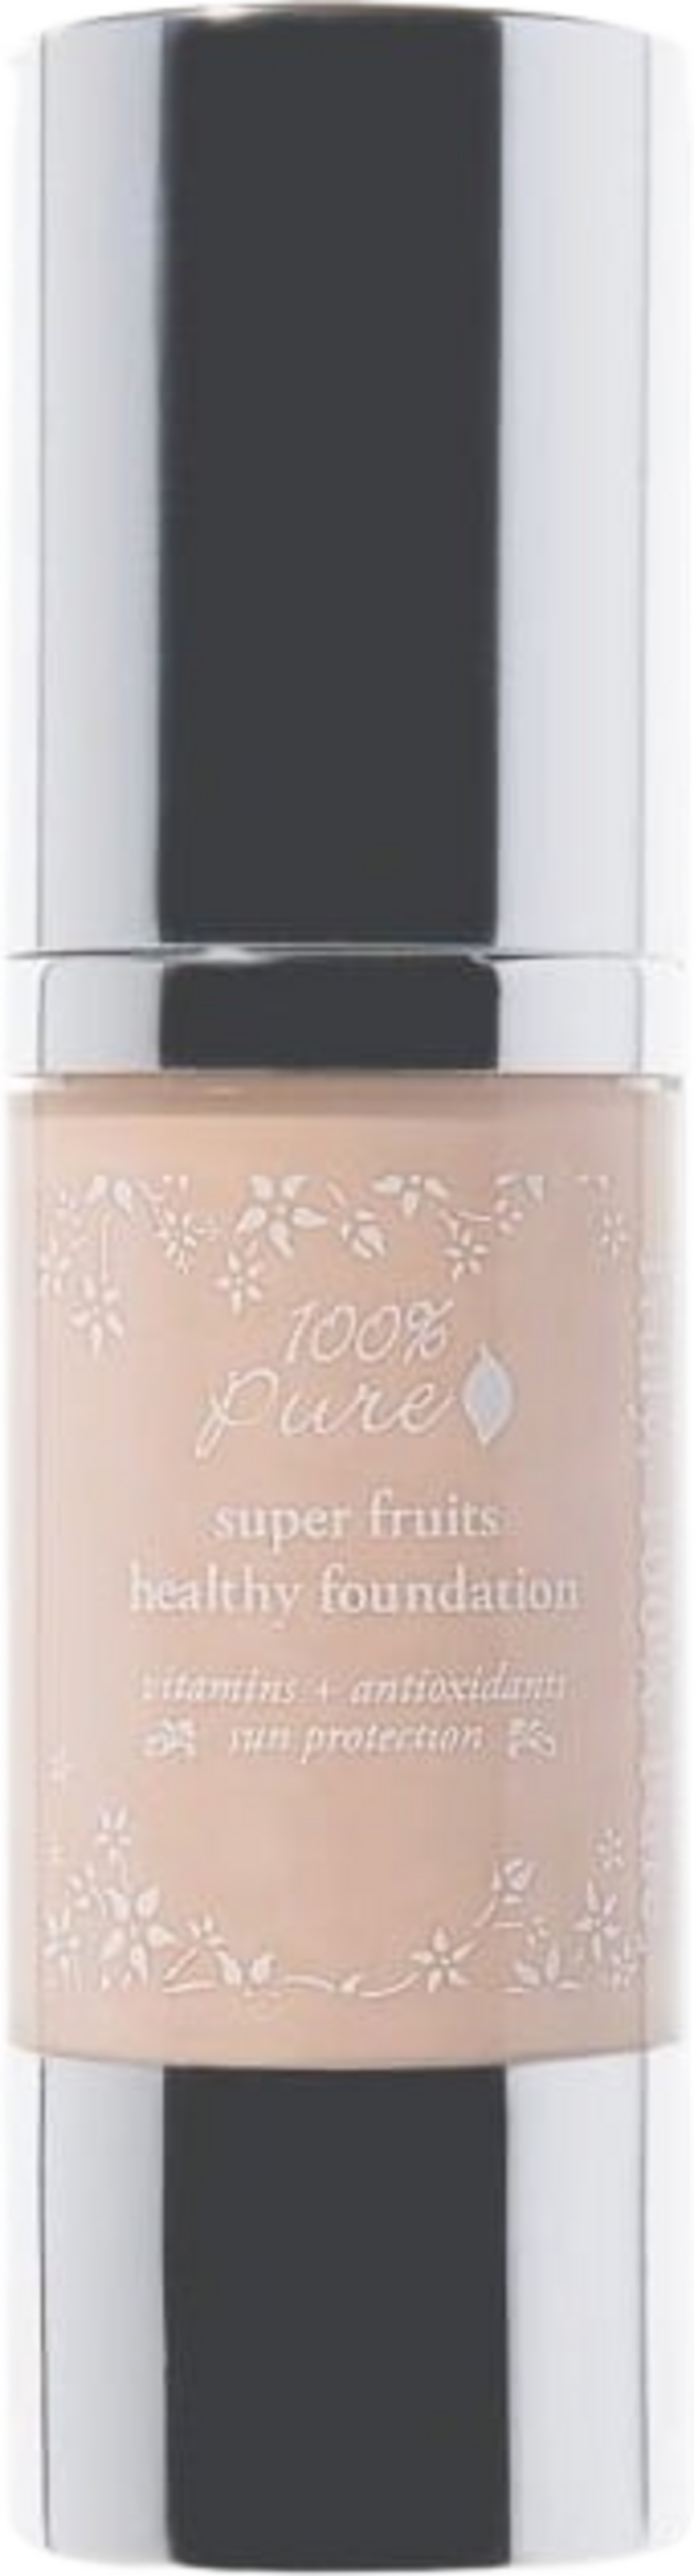 100% Pure Super Fruits Healthy Foundation - White Peach (light)